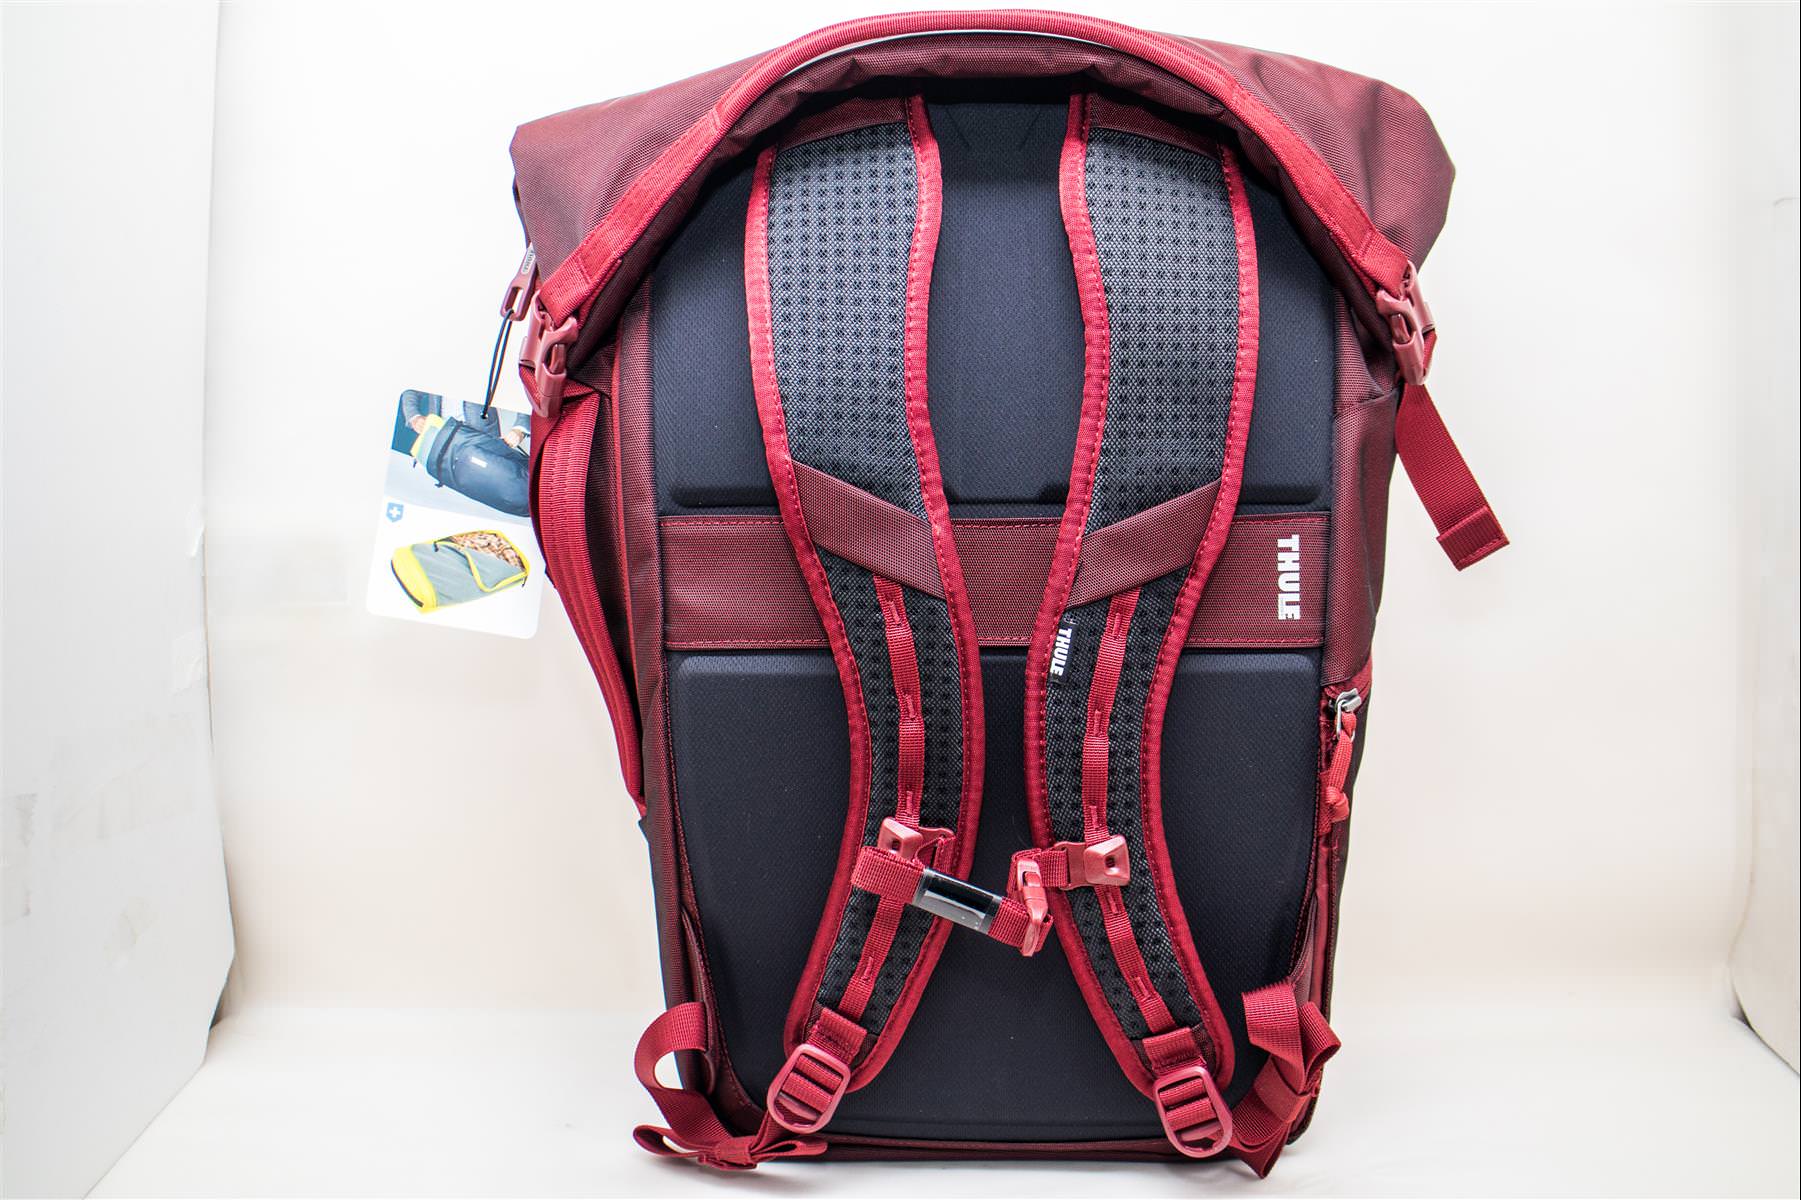 THULE Travel Backpack